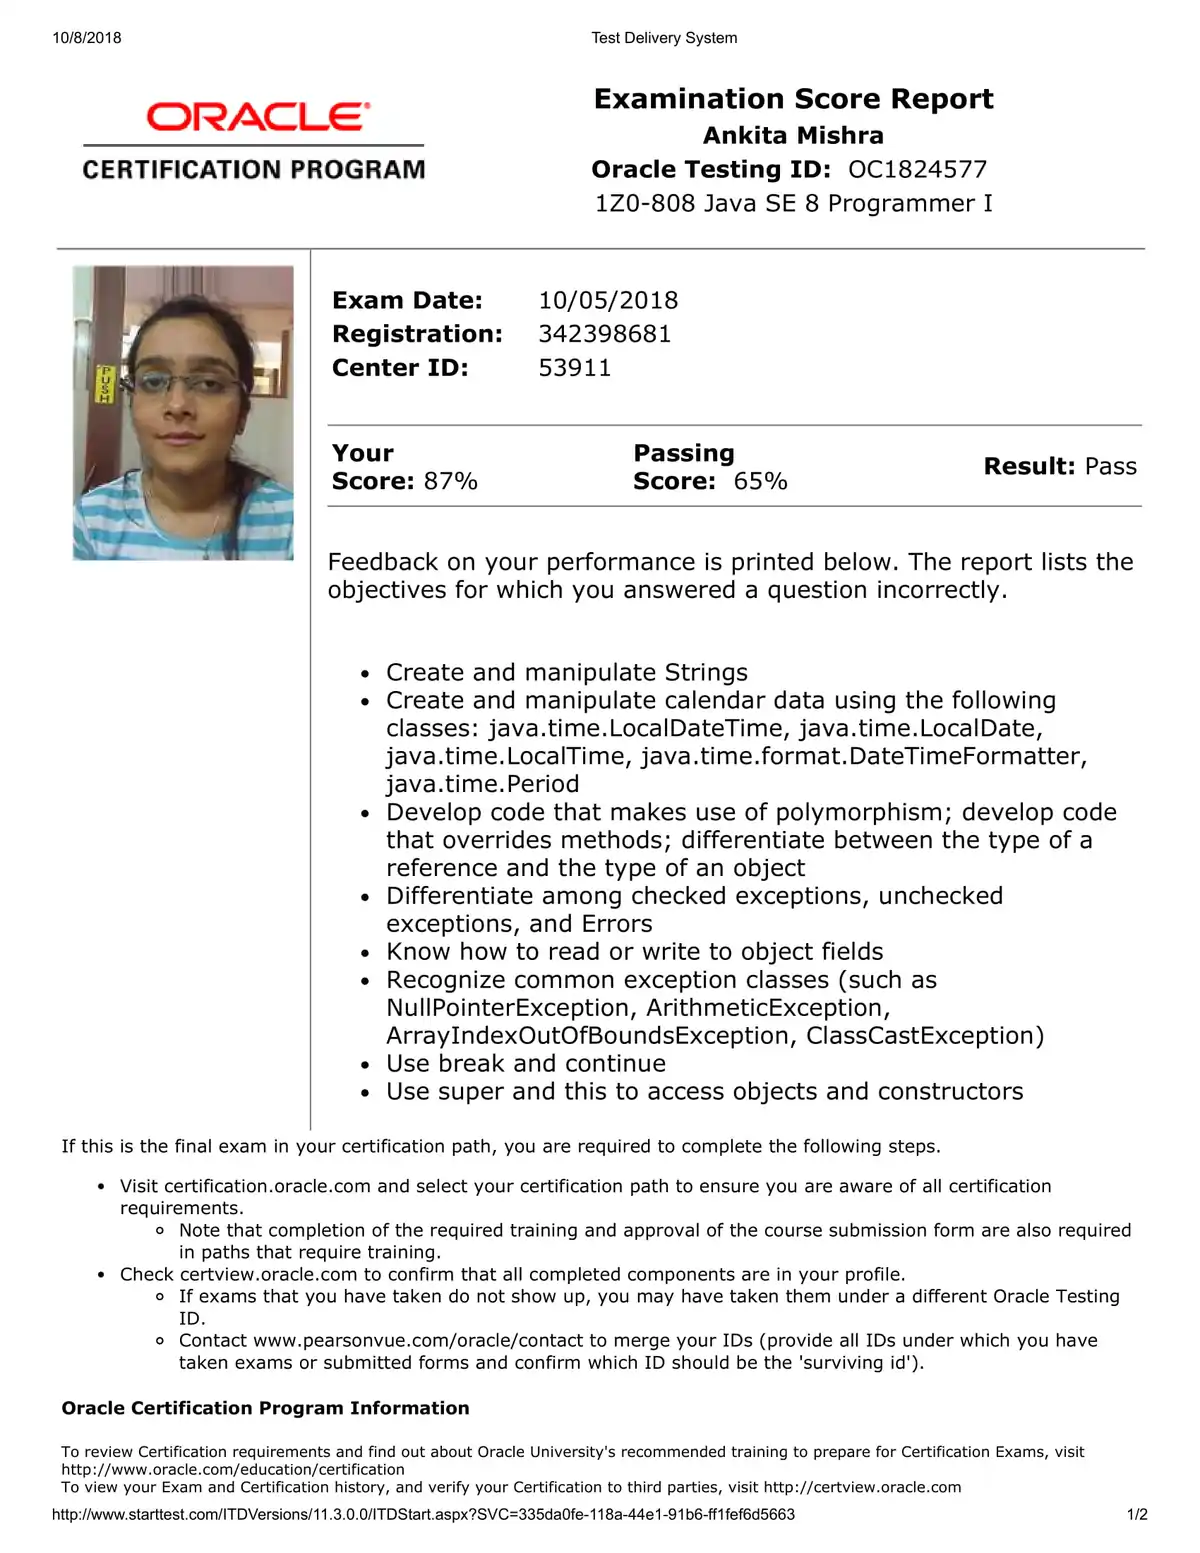 Ankita Mishra Java SE 8 Programmer I 1Z0 808 Scoresheet Unisoft Technologies Nagpur Java Certification Course